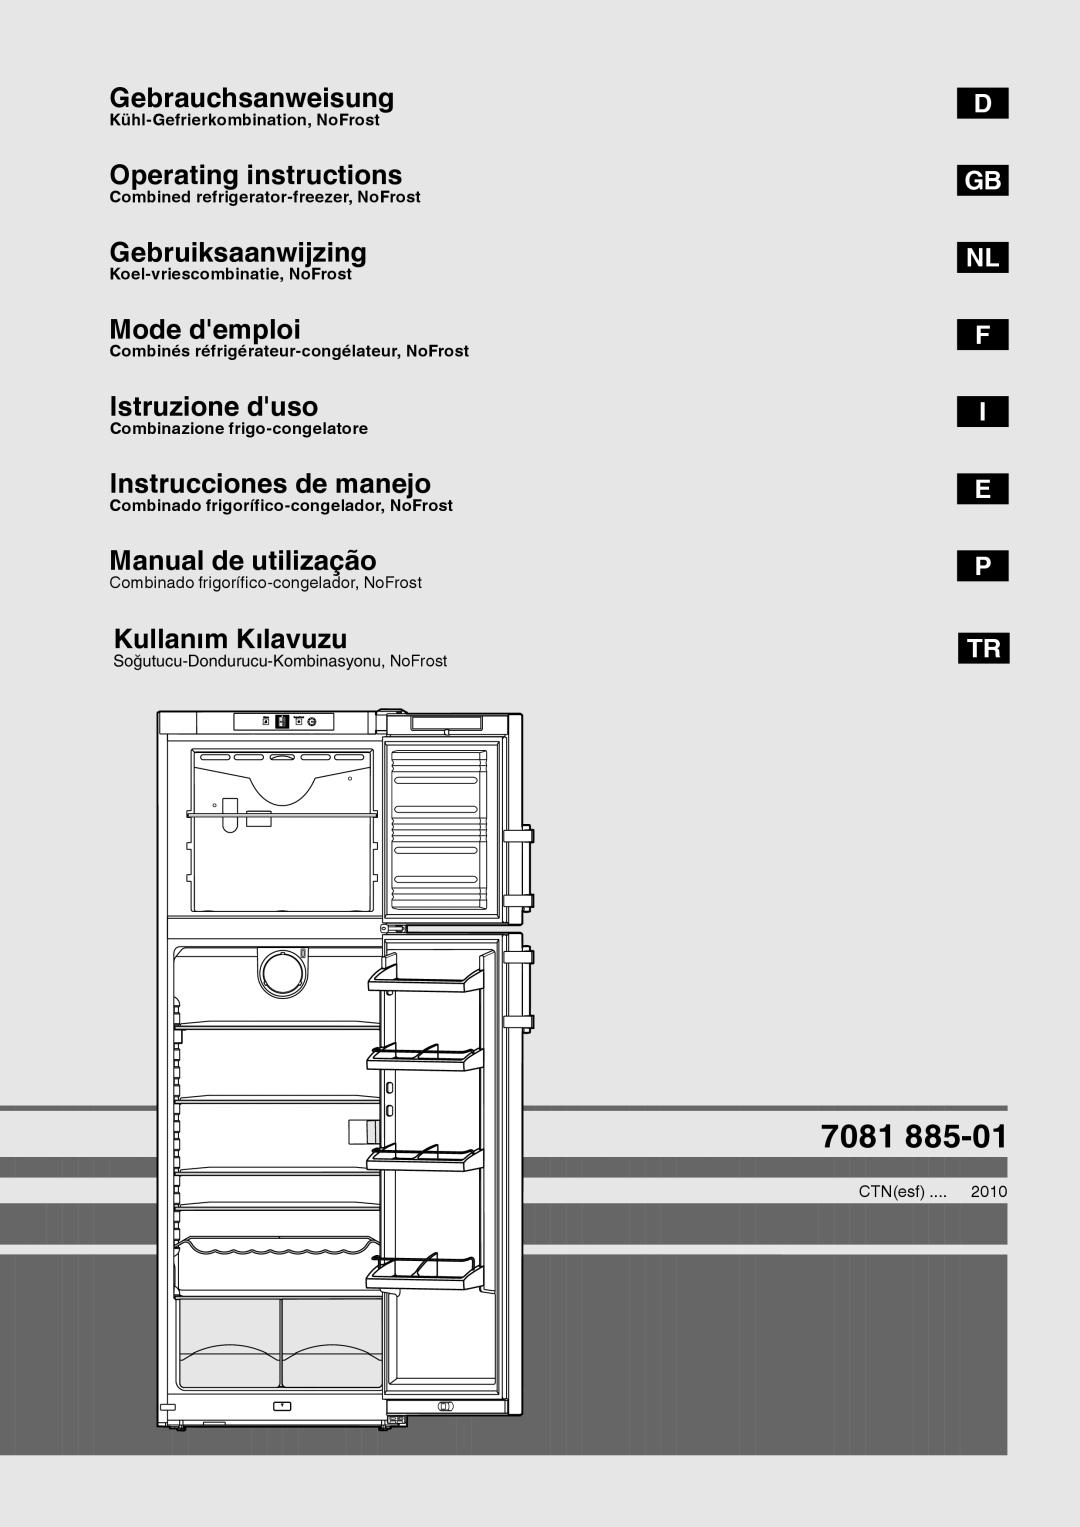 Liebherr 7081 885-01 manual D Gb Nl F I E P Tr, Kühl-Gefrierkombination, NoFrost, Combined refrigerator-freezer, NoFrost 